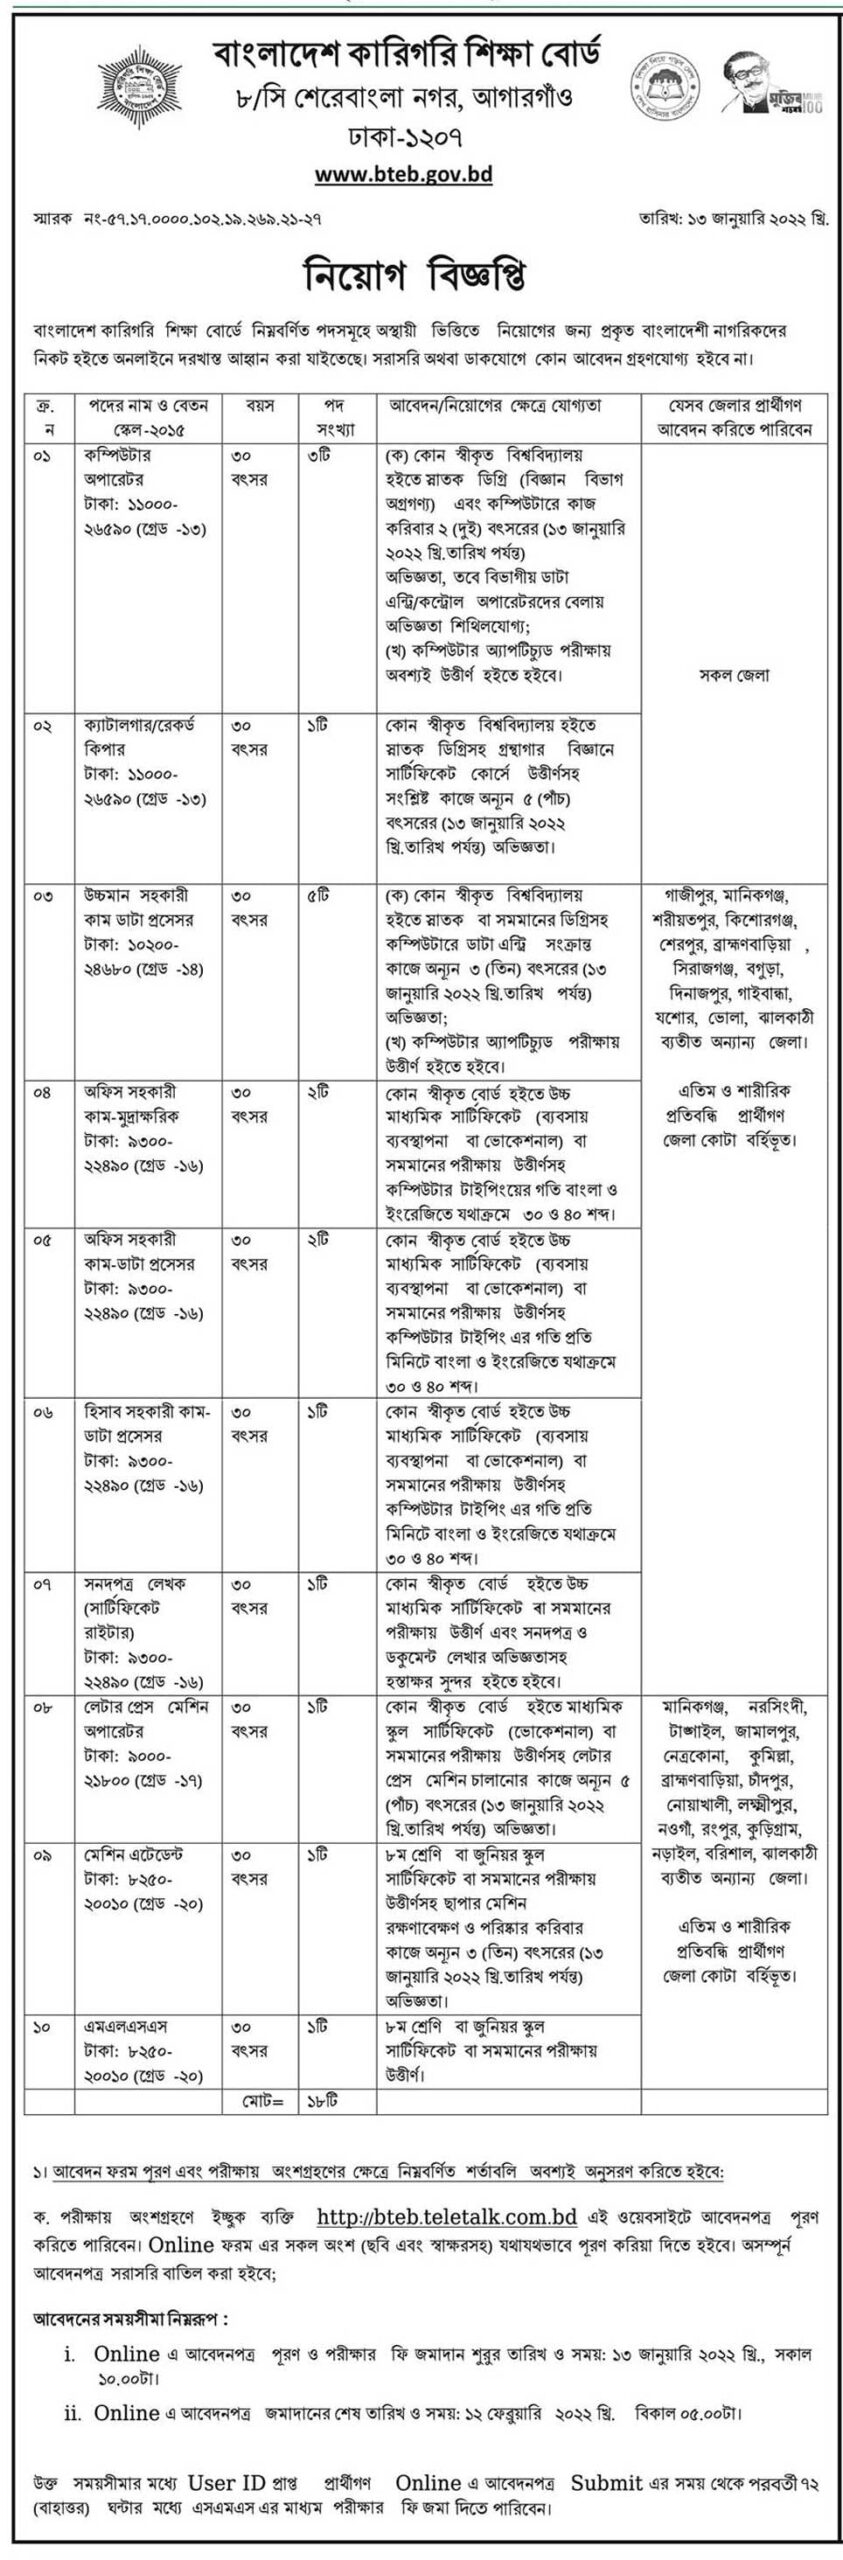 https://bdjobs24.net/wp-content/uploads/2022/01/Bangladesh-Technical-Education-Board-BTEB-Job-Circular-2022c-scaled.jpg